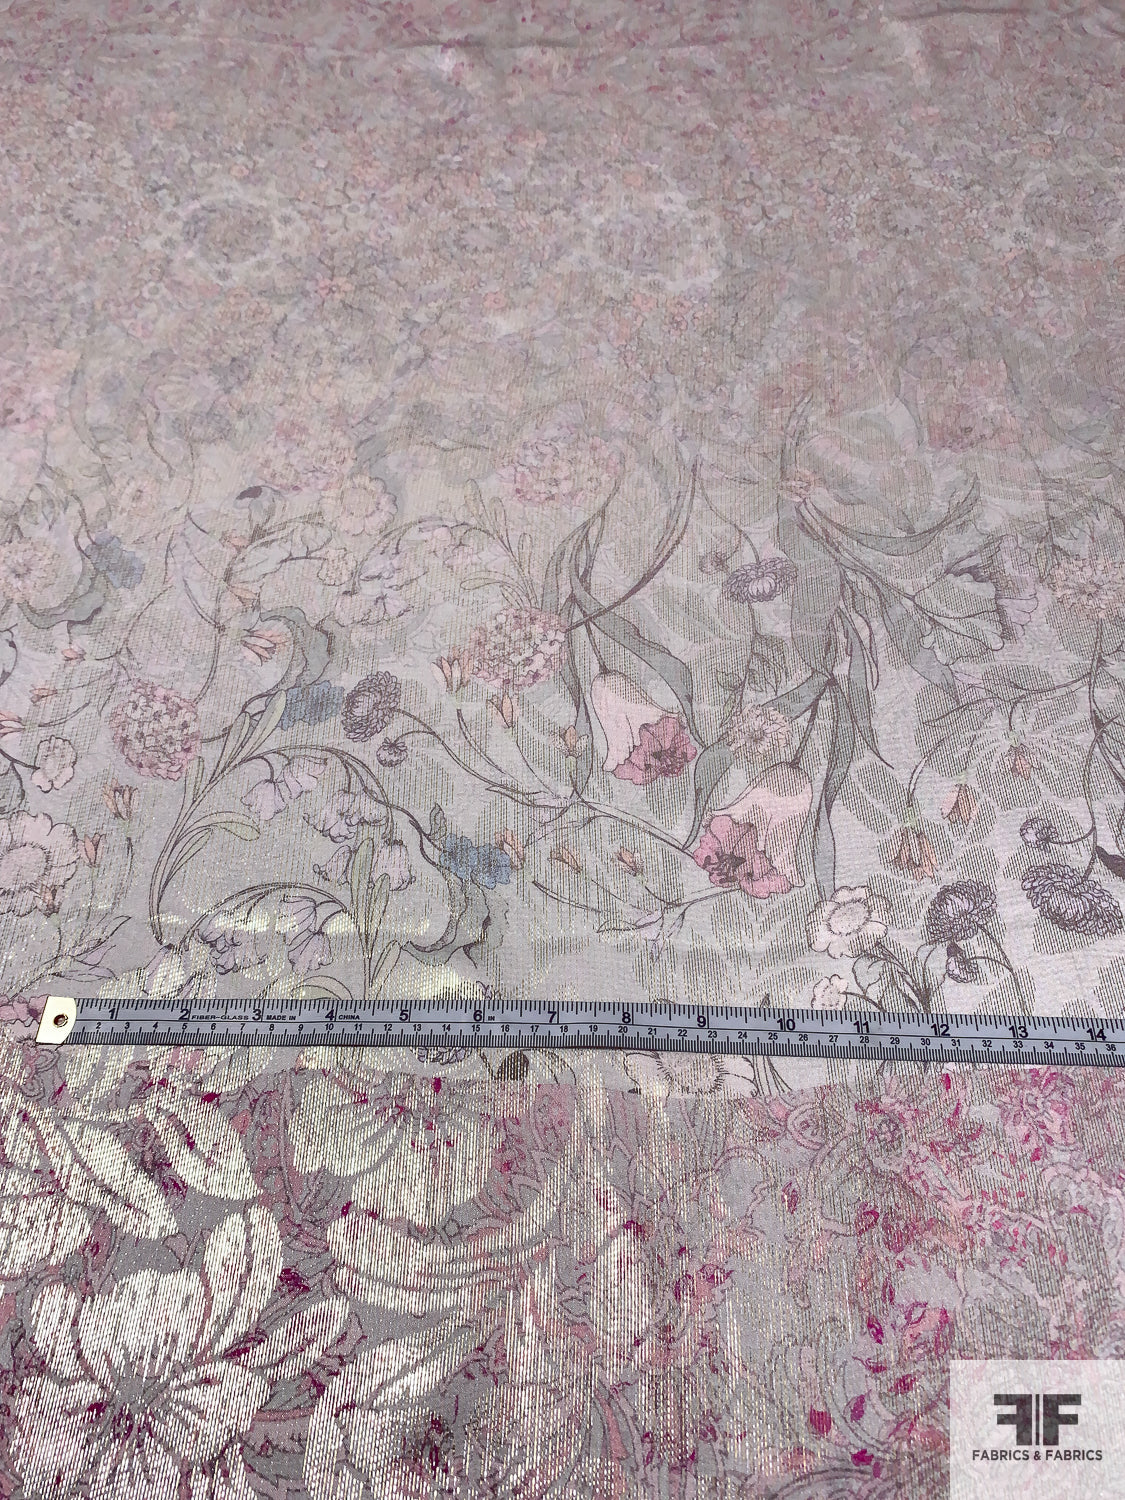 Floral Printed Metallic Silk Charmeuse Panel - Light Grey / Light Pastels / Silver / Gold / Pinks